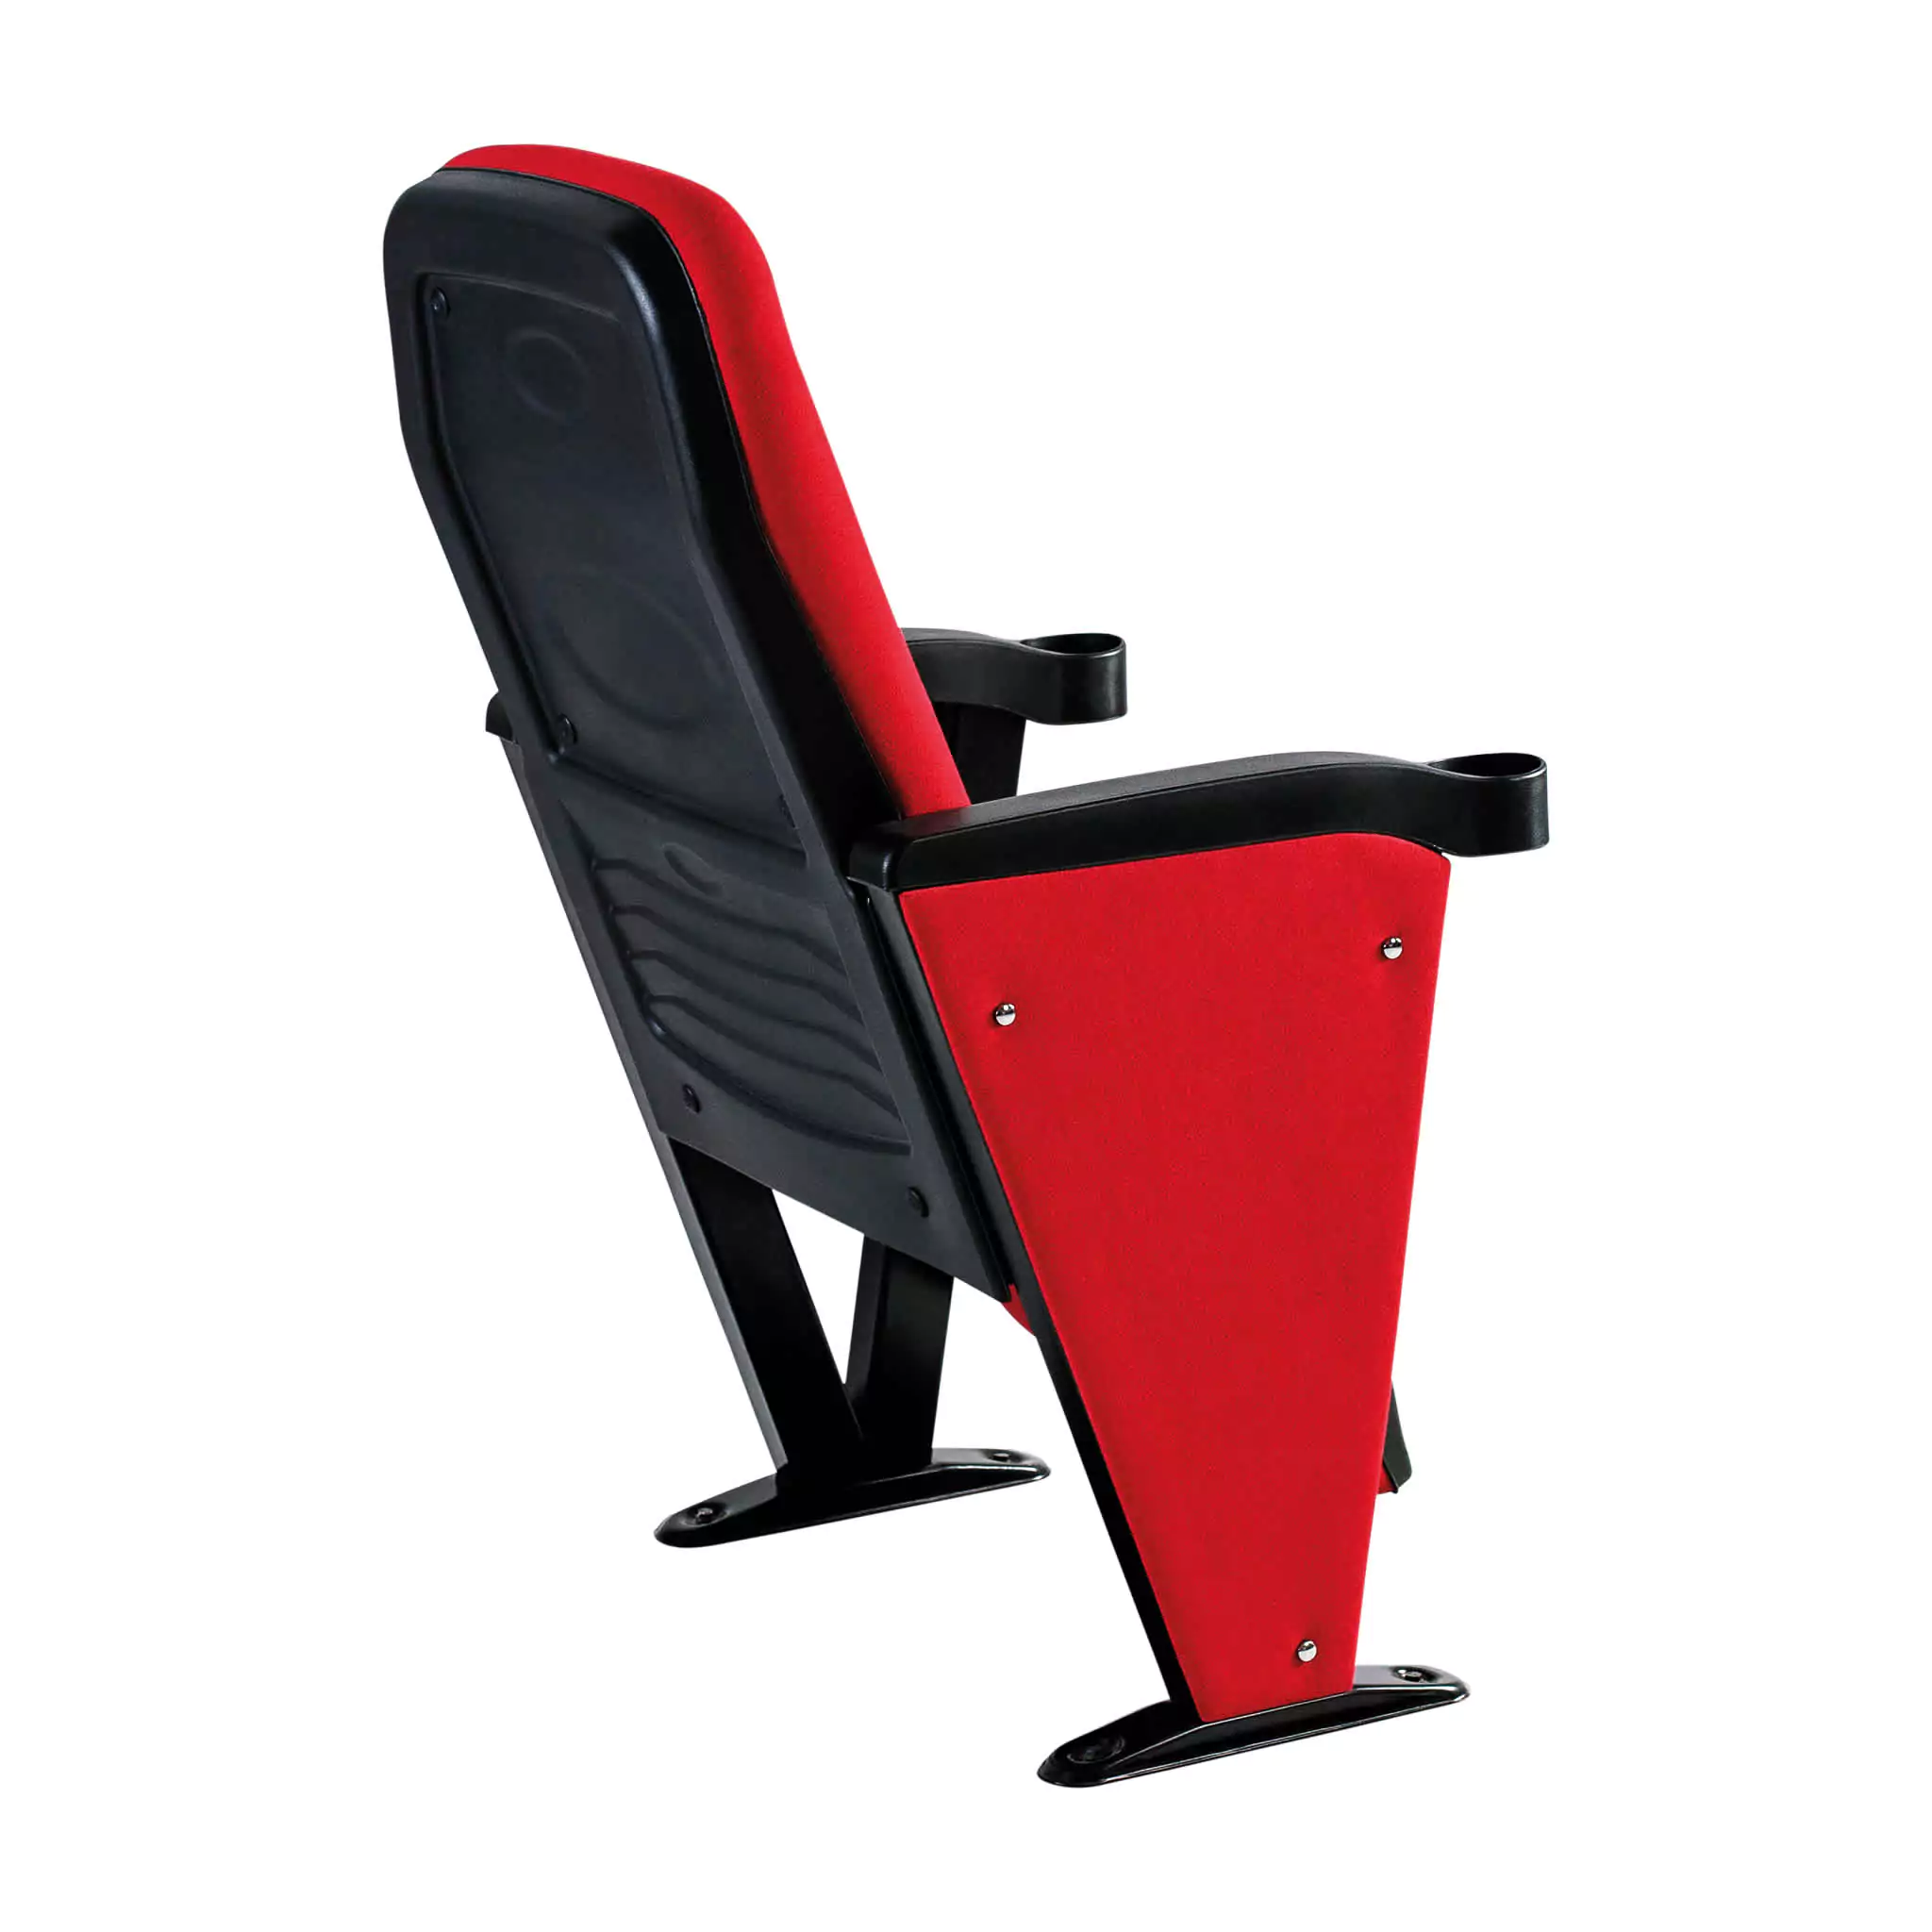 Seat Model: ZIRCON 01